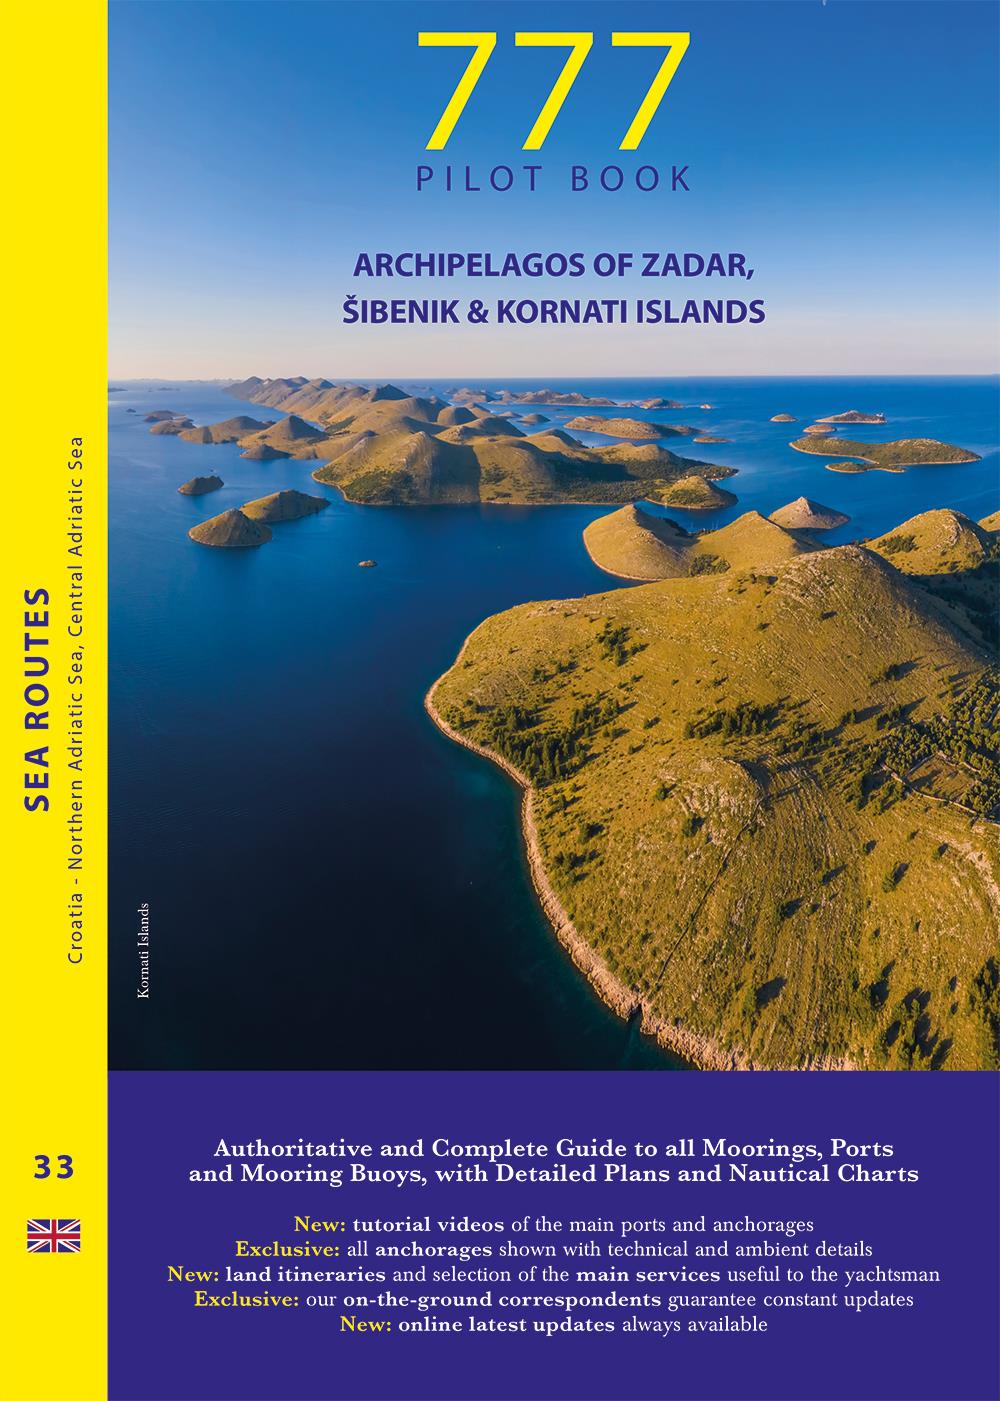 777 Pilot book Archipelagos of Zadar, Sibenik & Kornati Islands